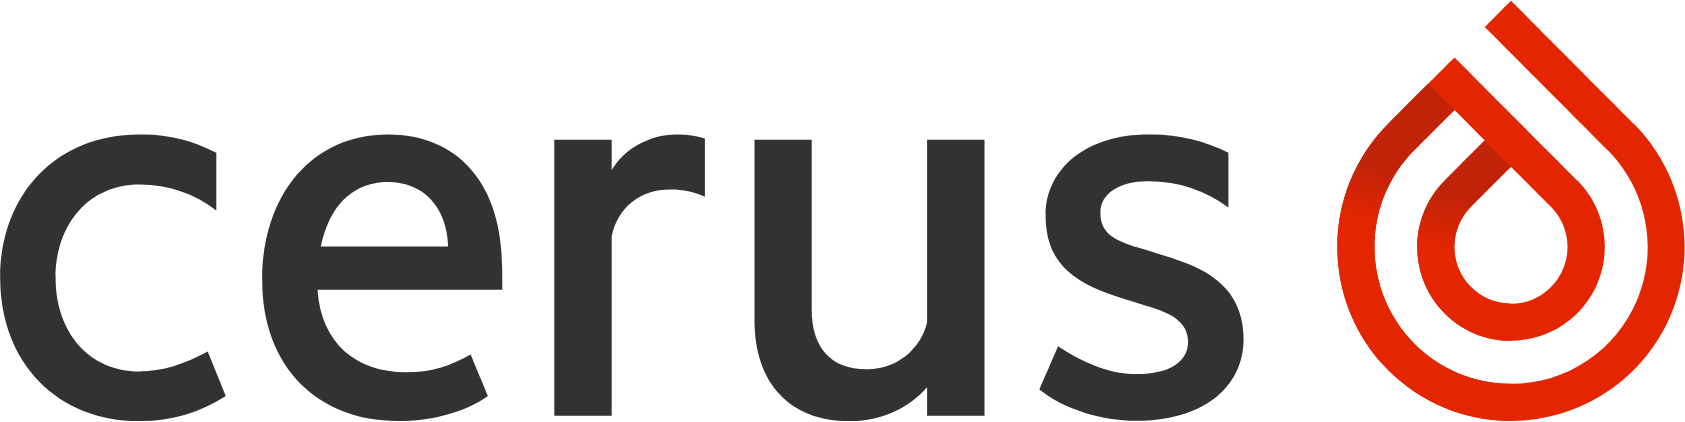 Cerus logo large (transparent PNG)